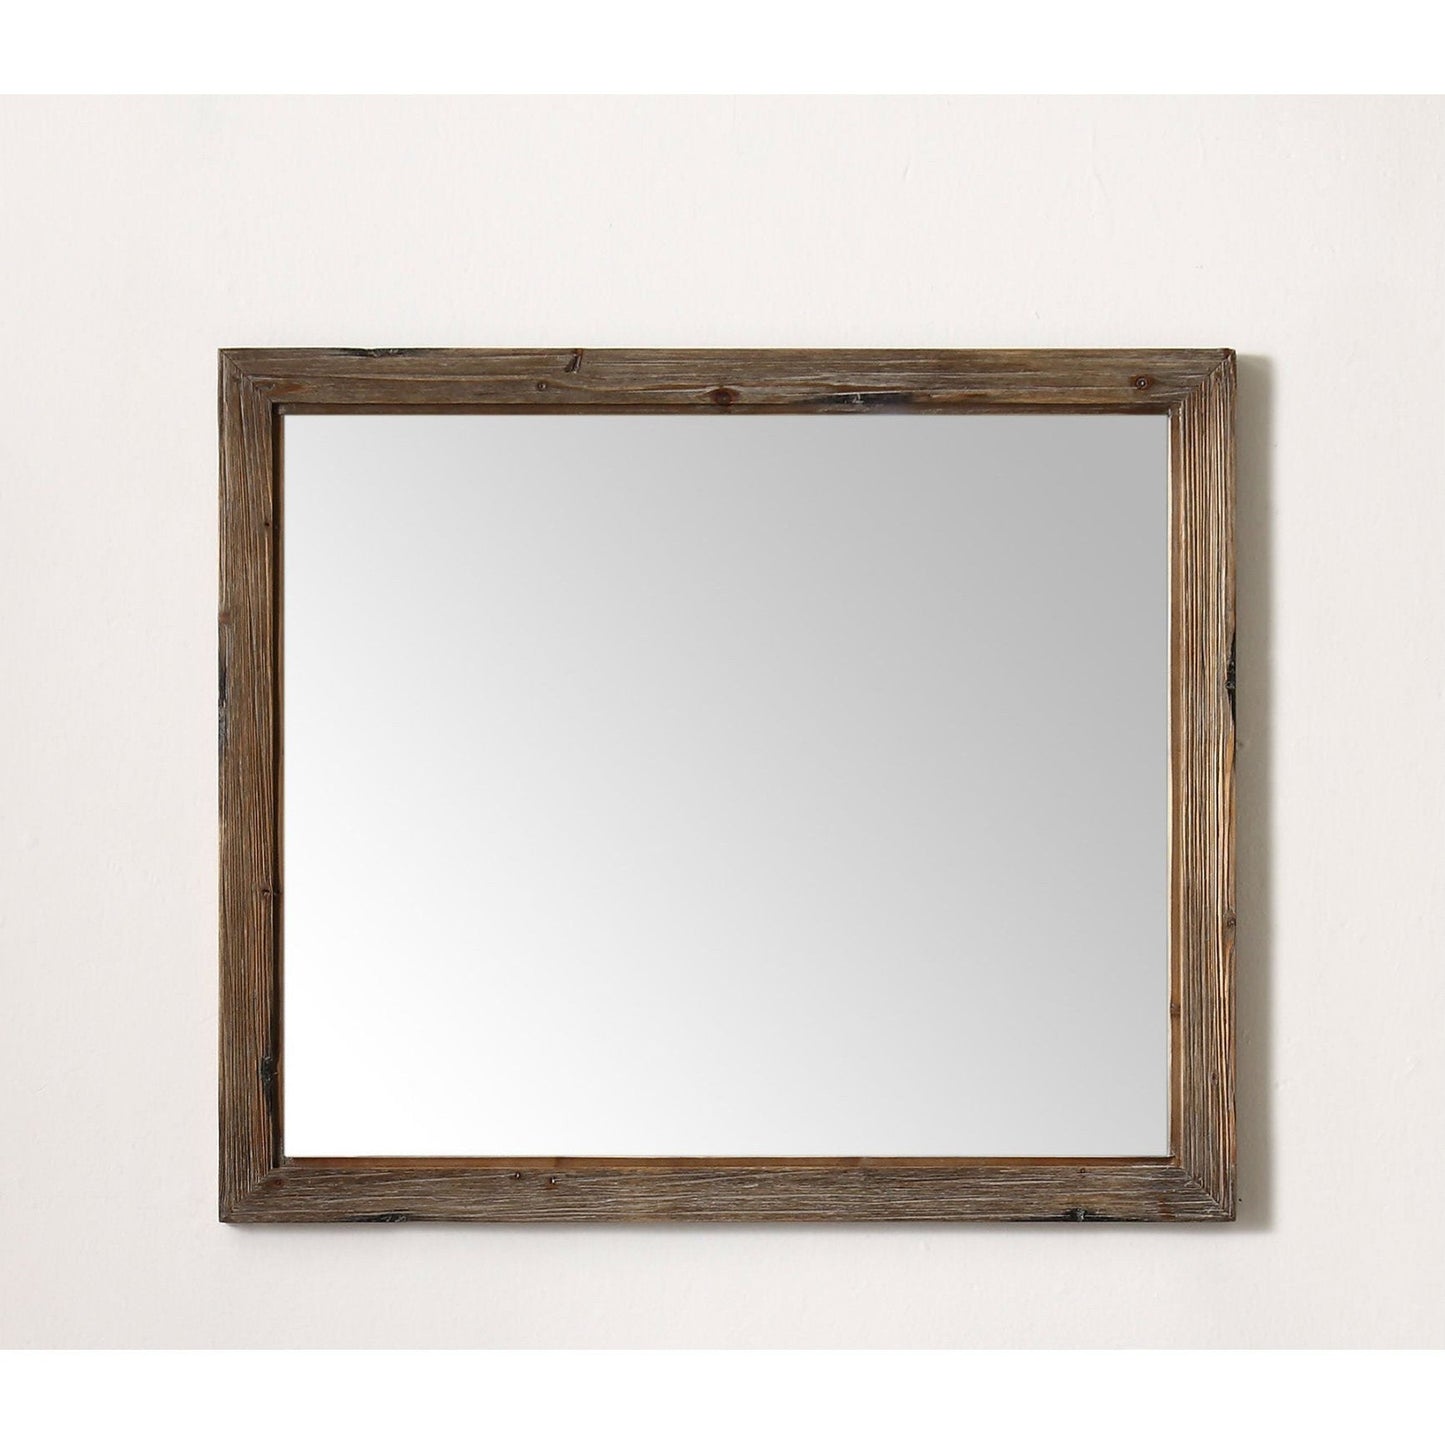 Legion Furniture 42" W x 36" H Rustic Brown Fir Wood Frame Mirror